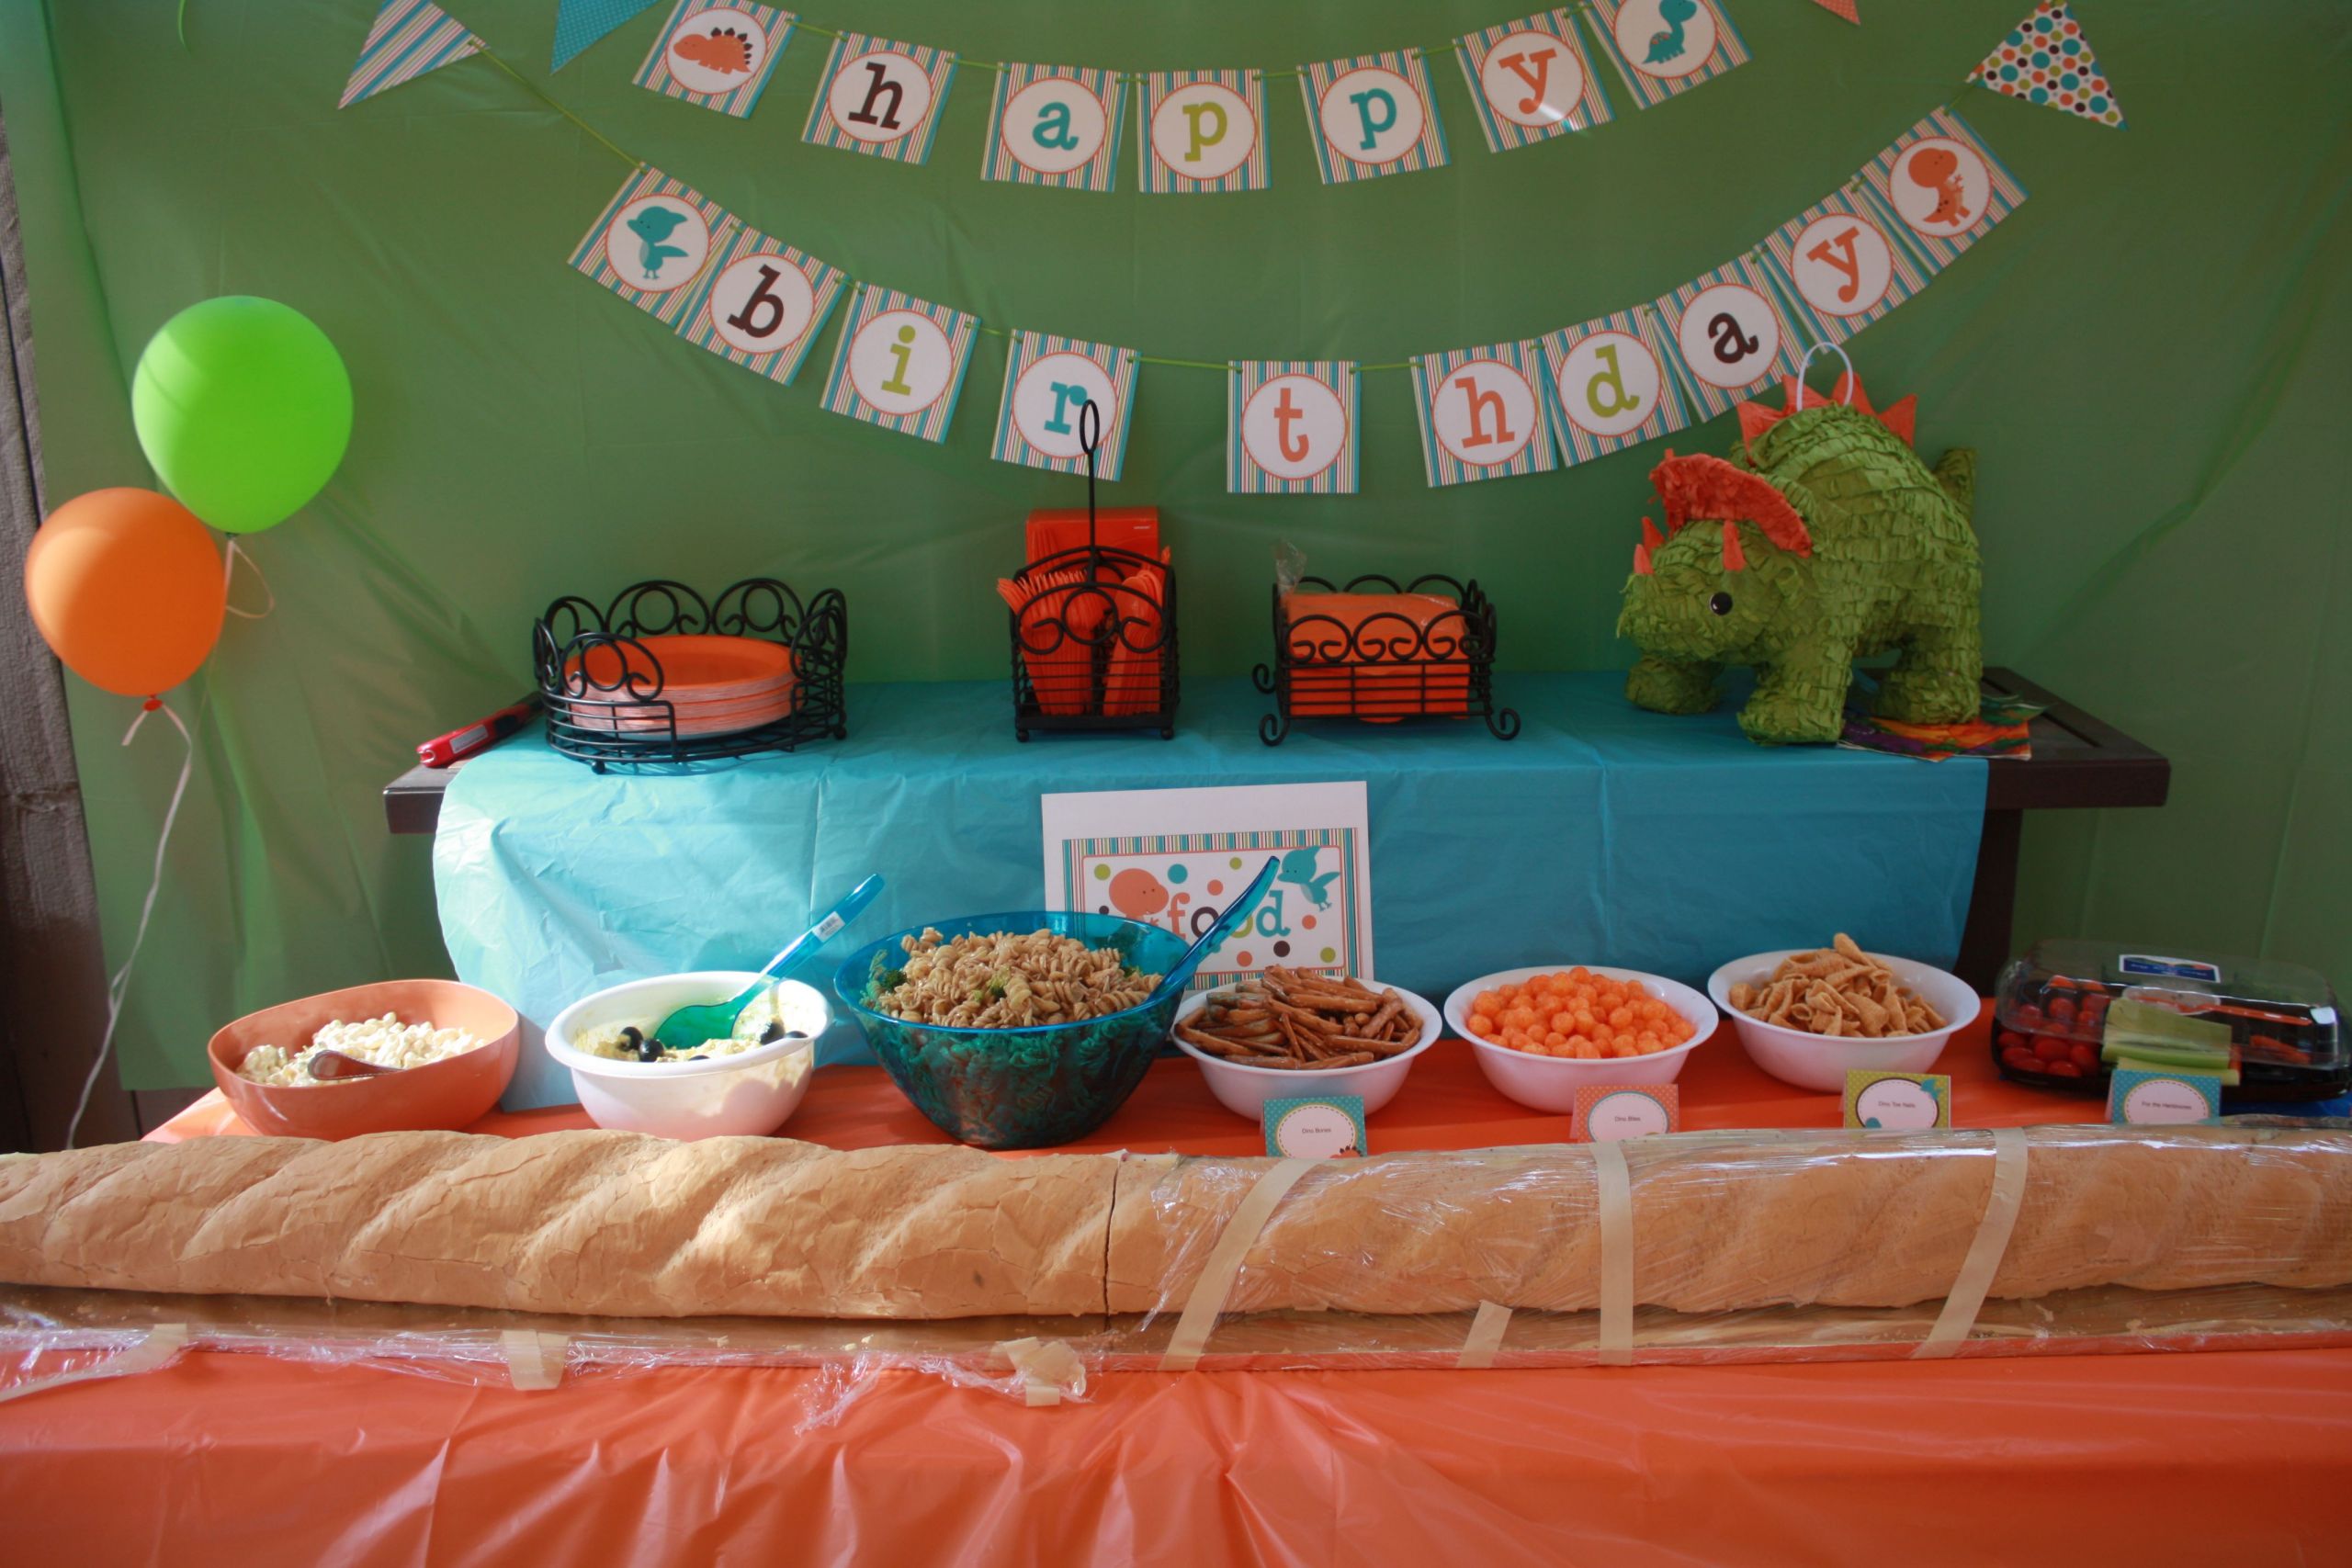 3Rd Birthday Party Food Ideas
 dinosaur party food ideas Dinosaur party